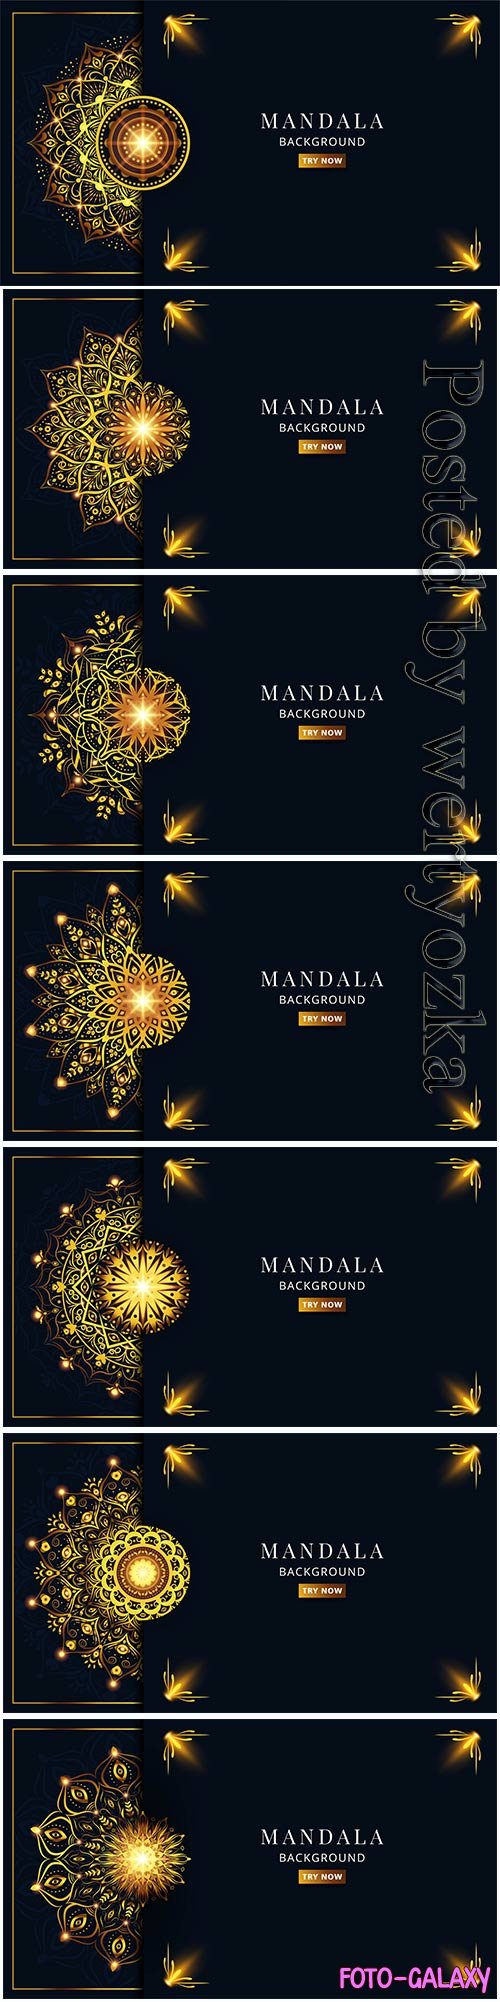 Luxury golden mandala vector banner